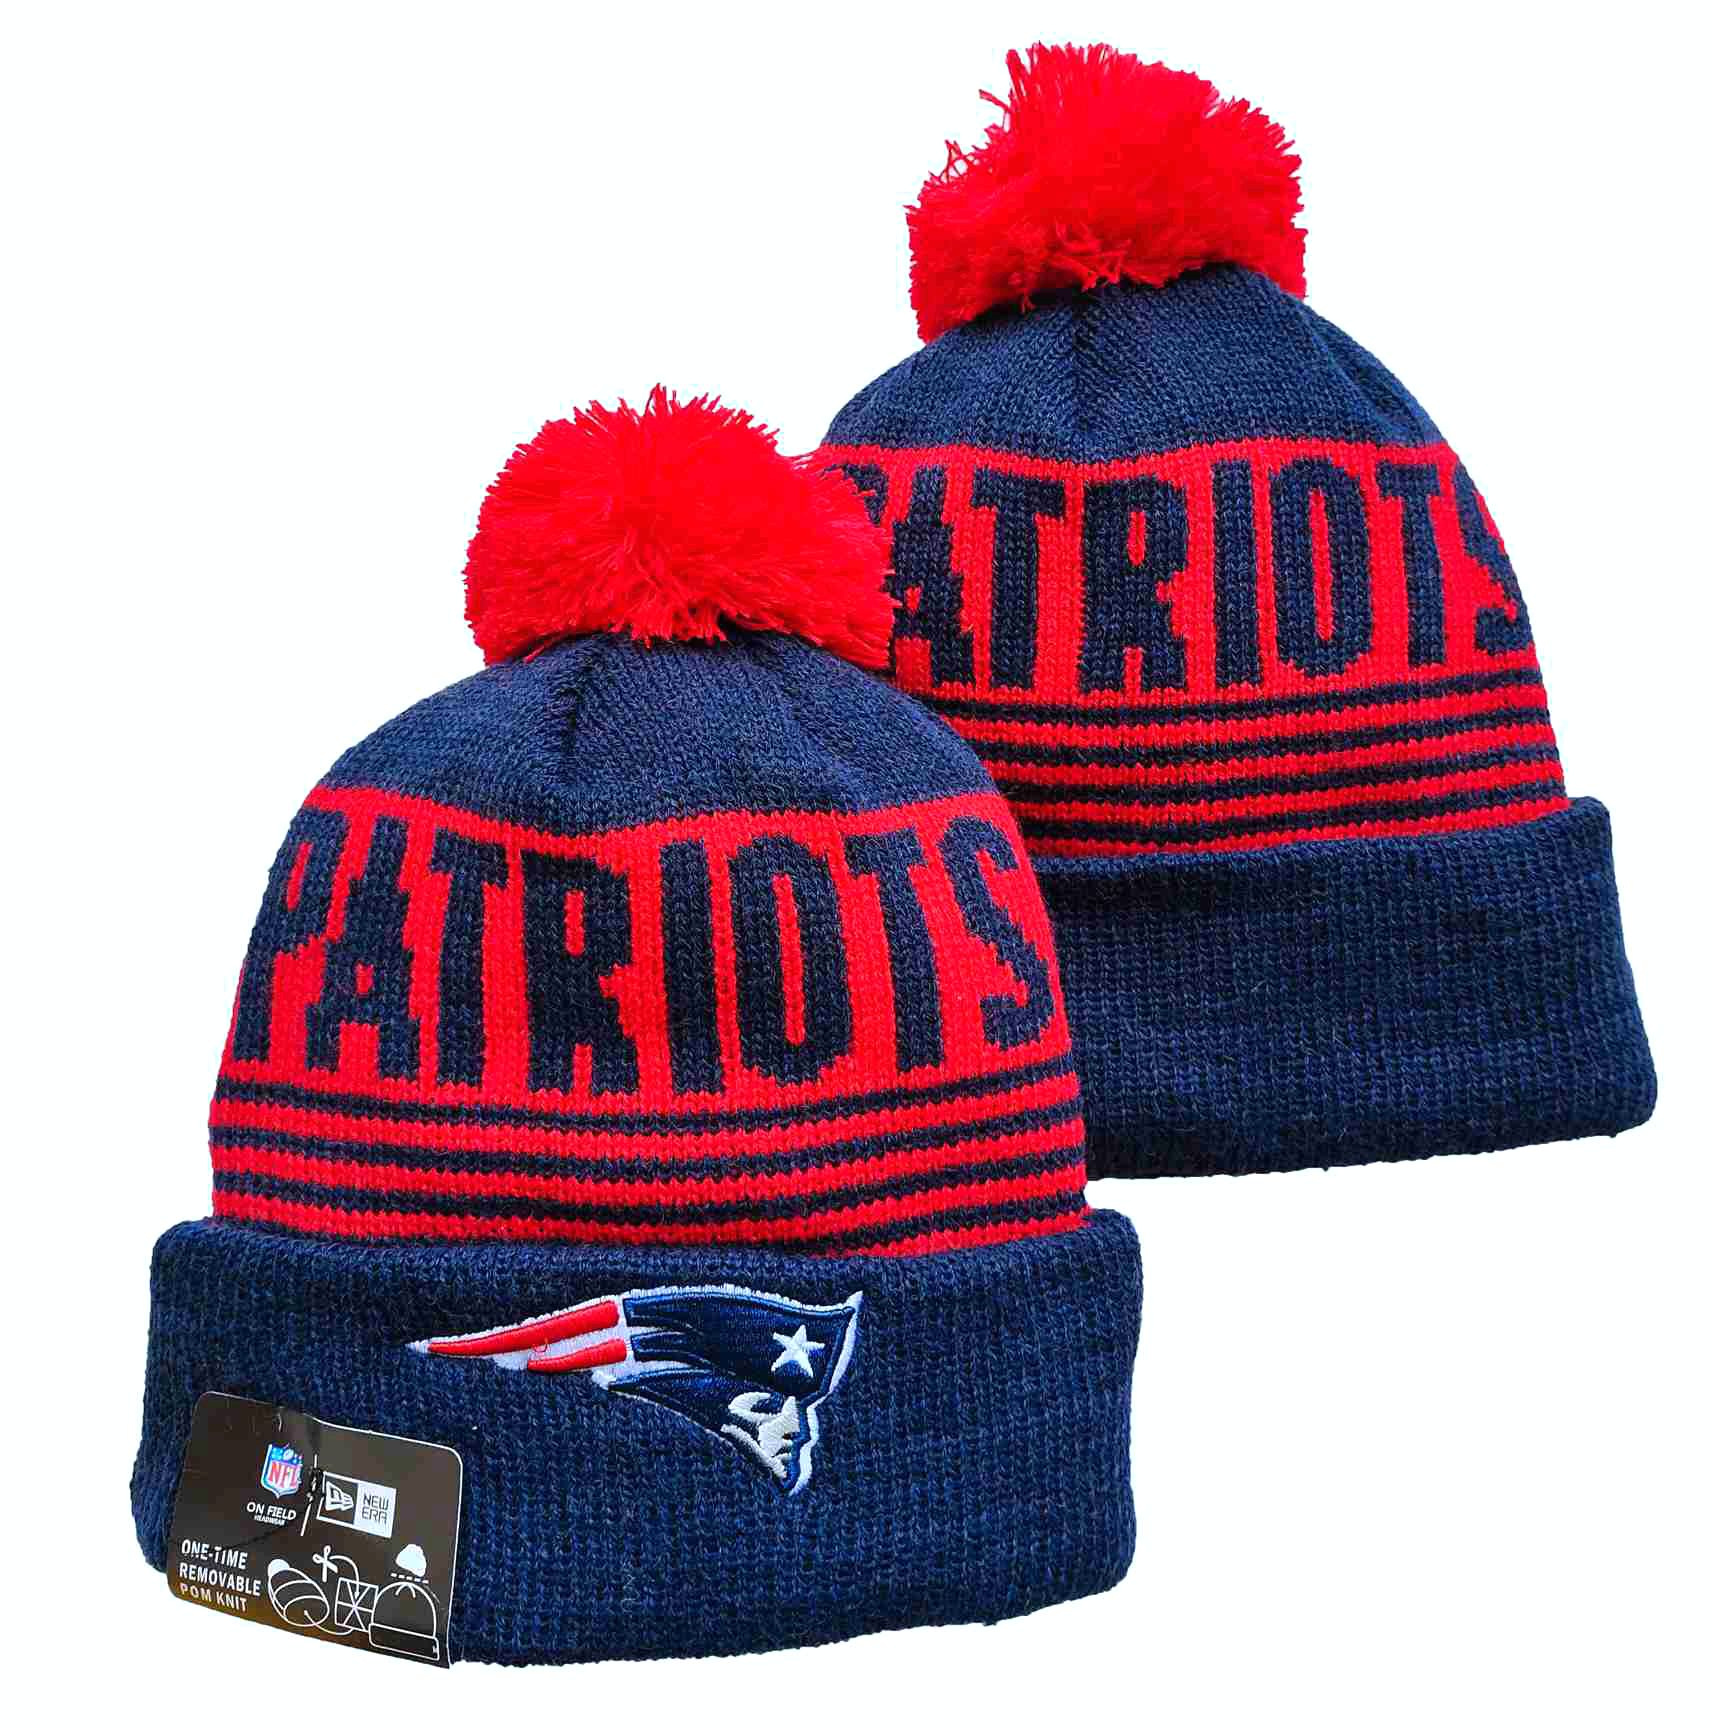 New England Patriots Knit Hats